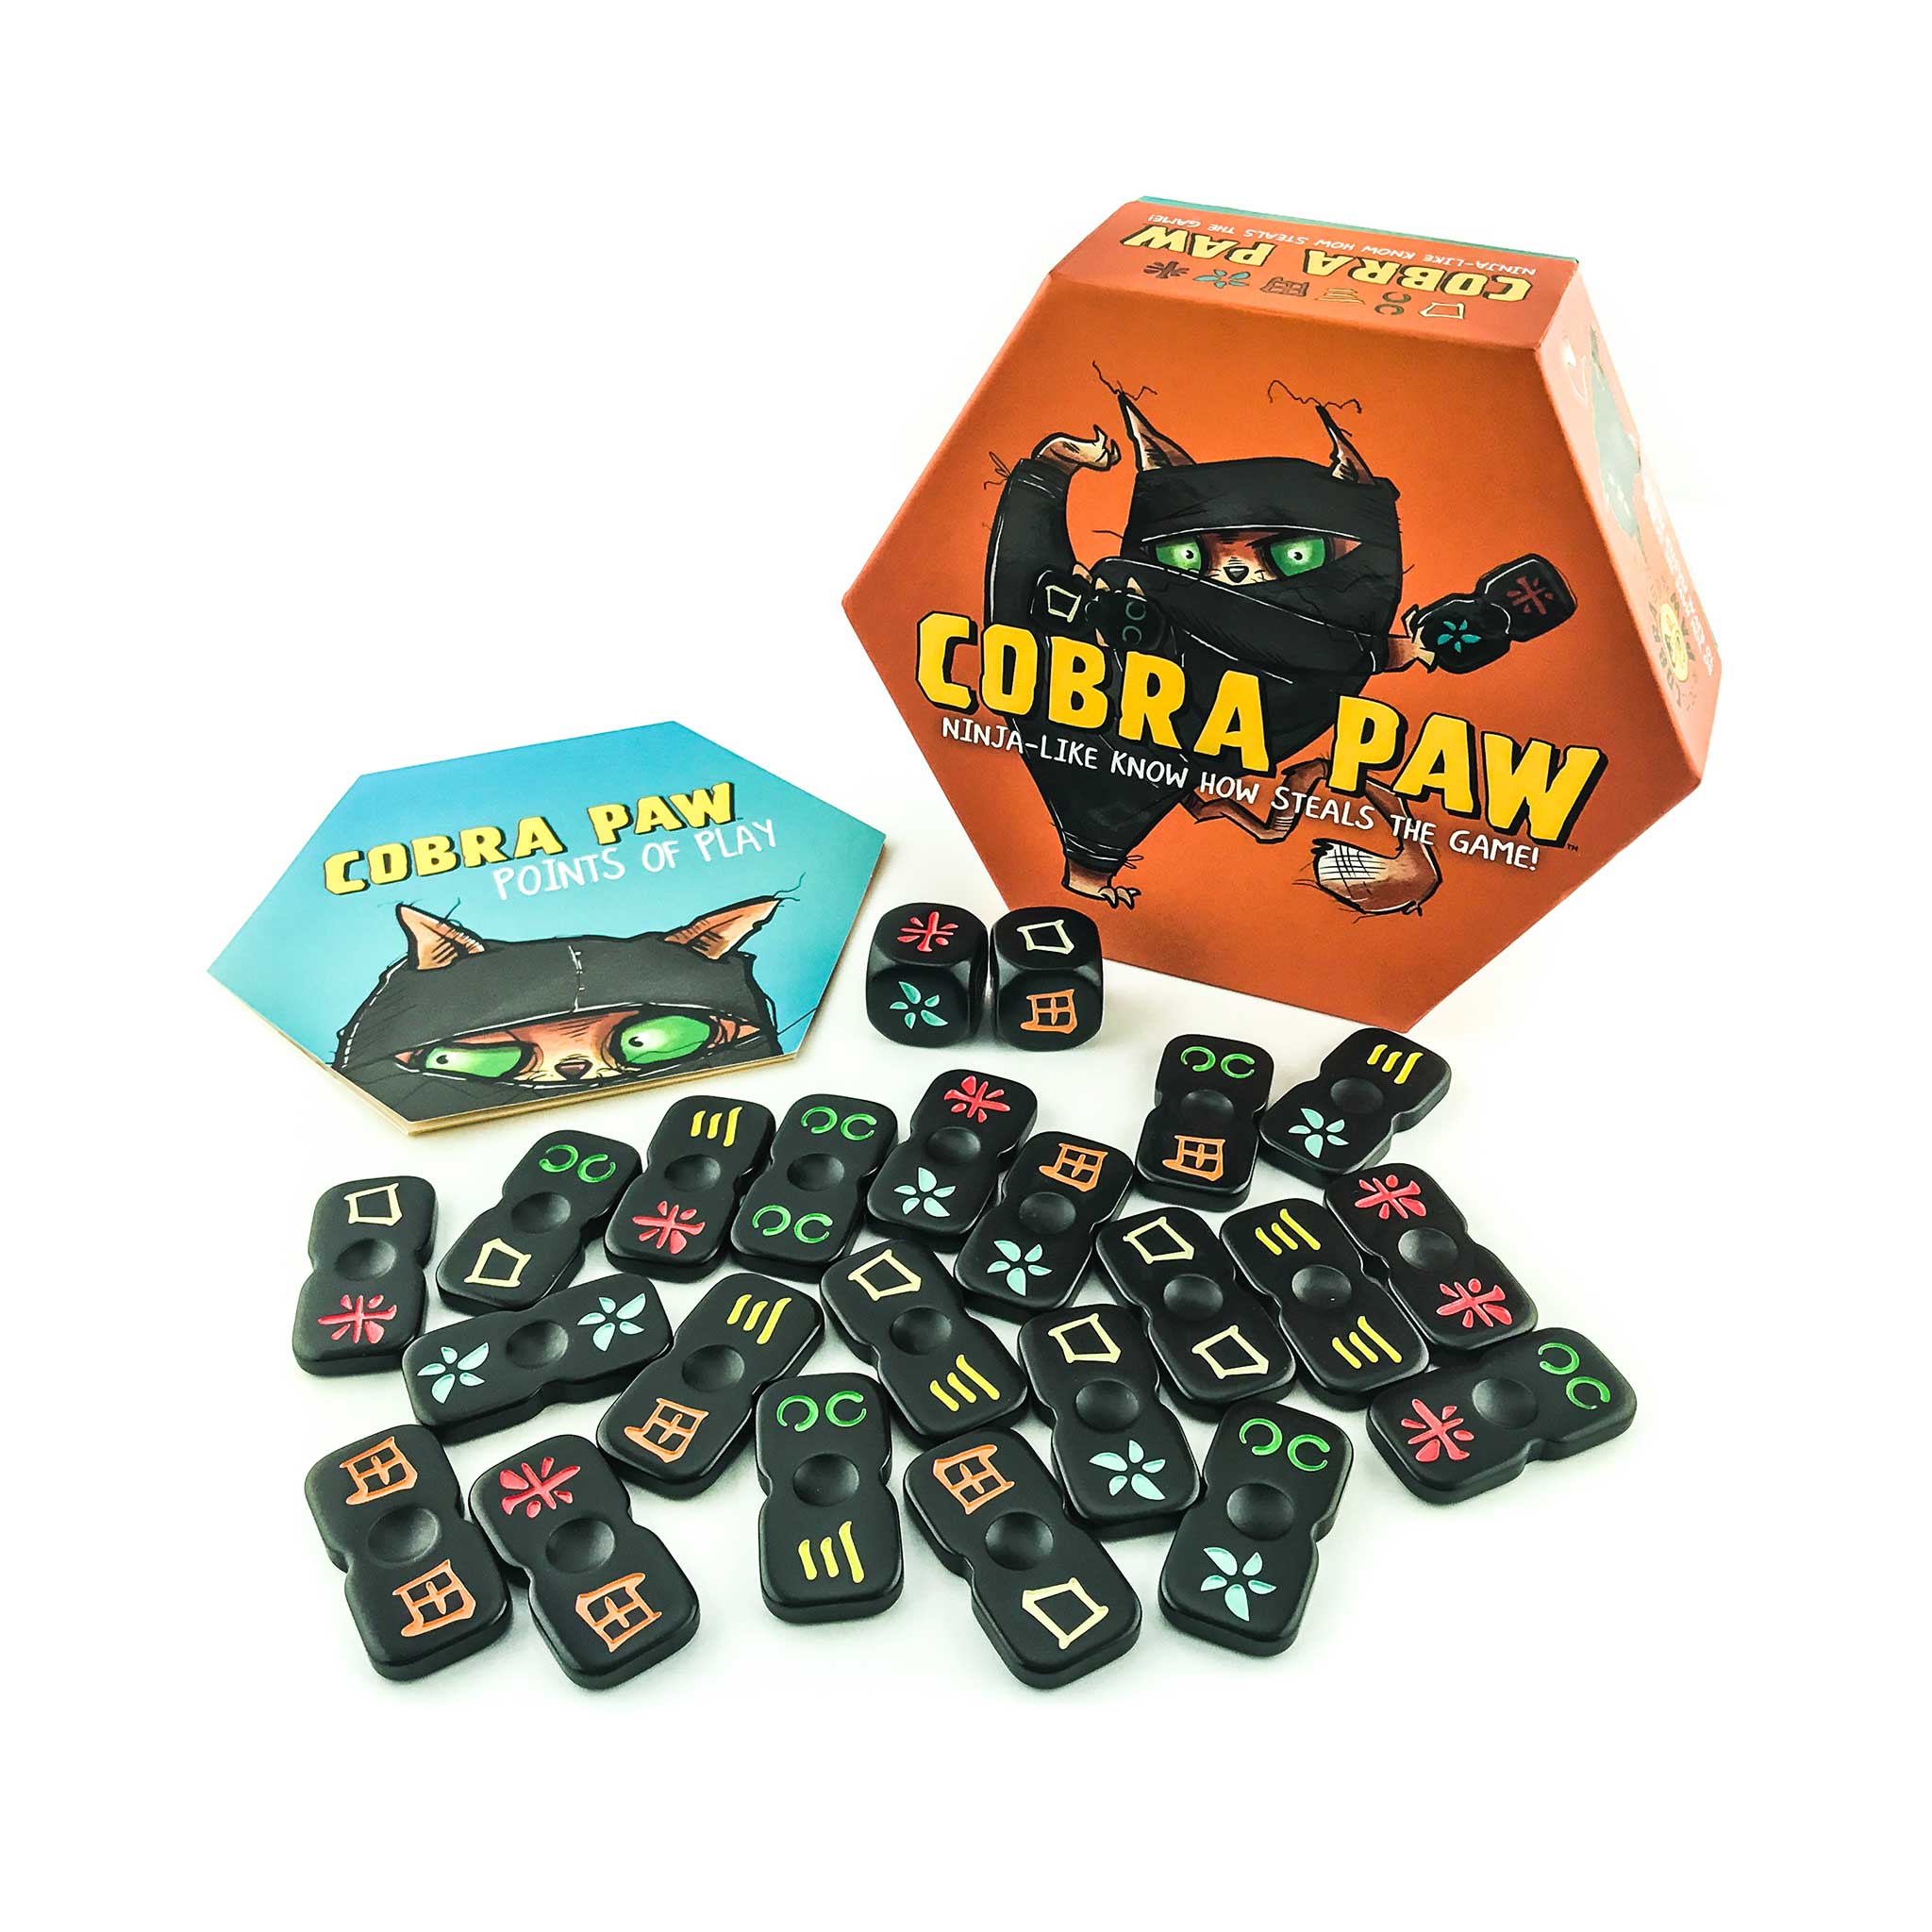 Cobra Paw box and tiles